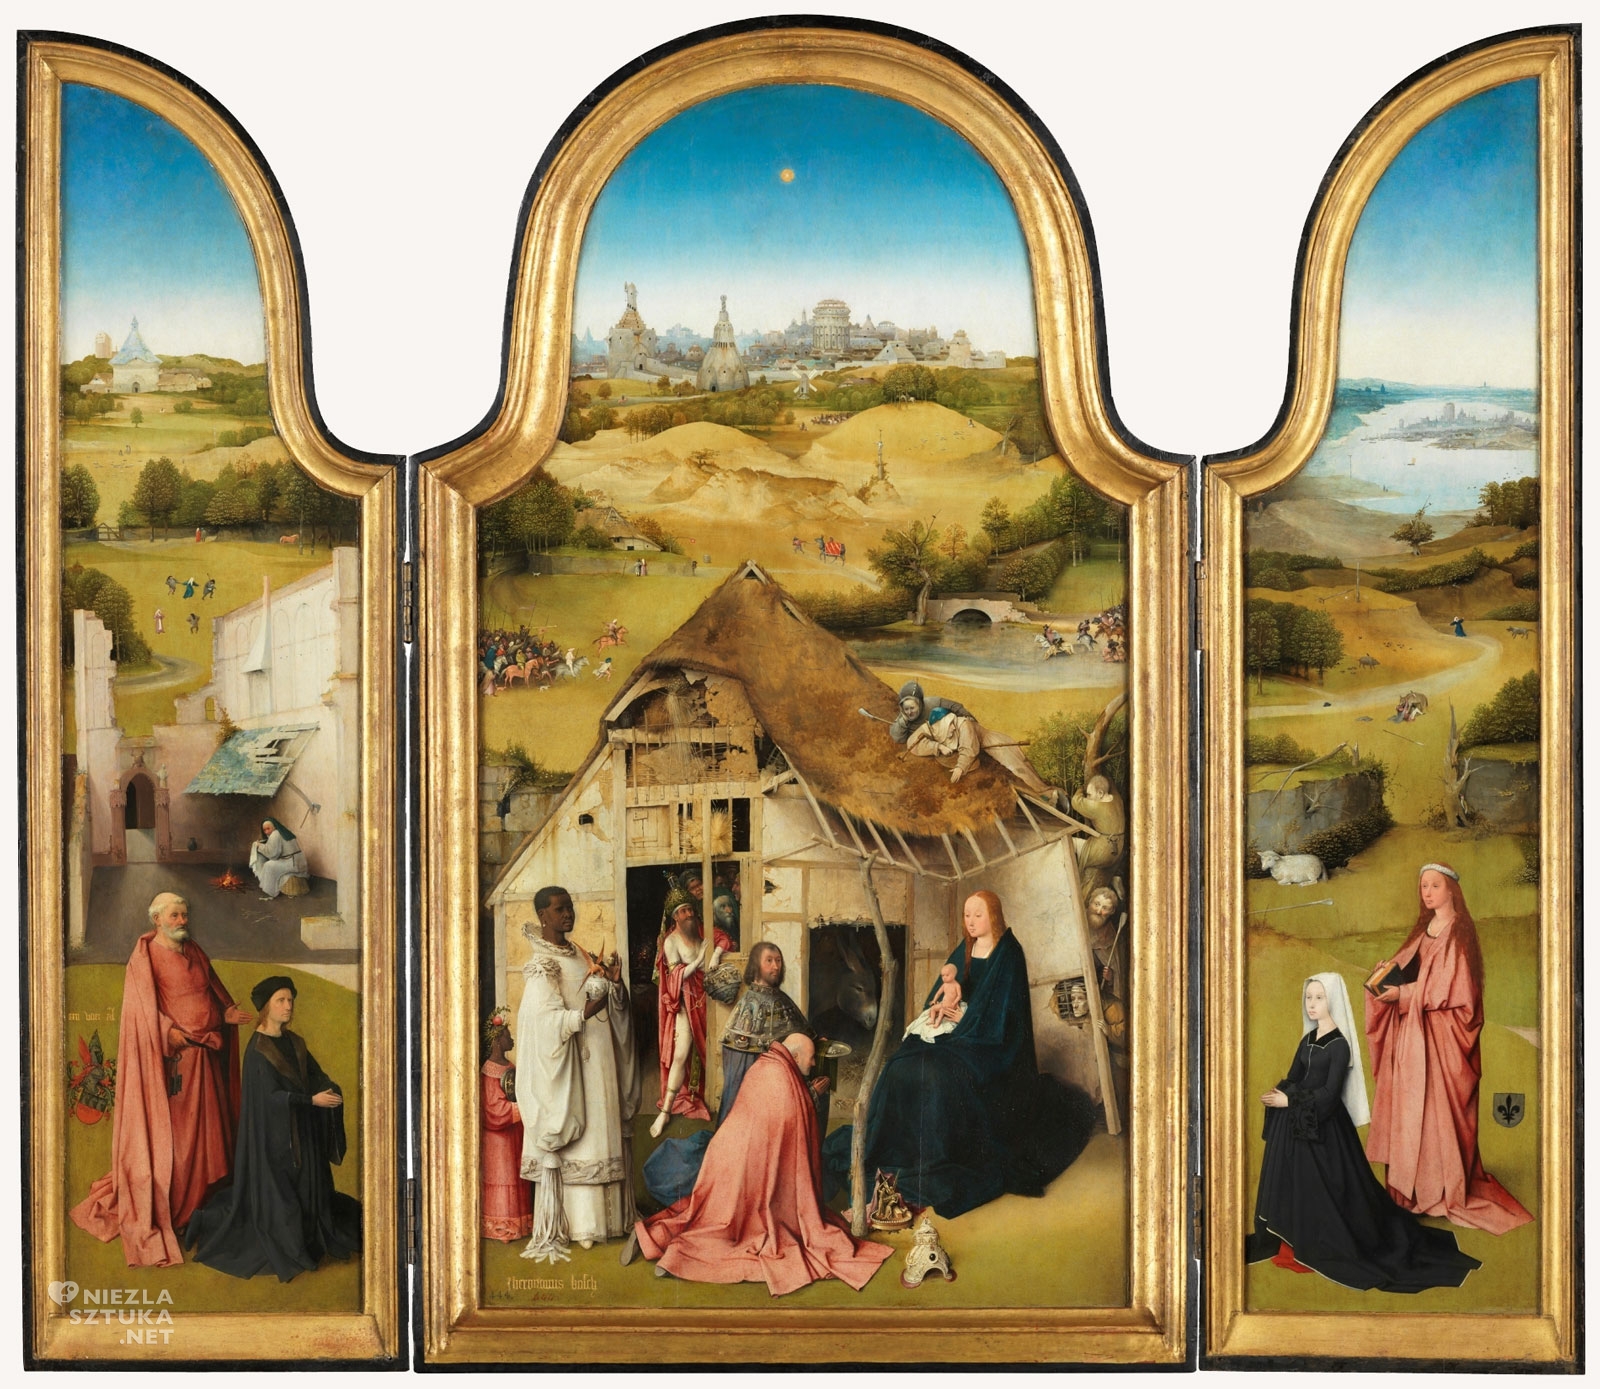 Hieronim Bosch, Pokłon Trzech Króli, Ołtarz Epifanii, Niezła Sztuka